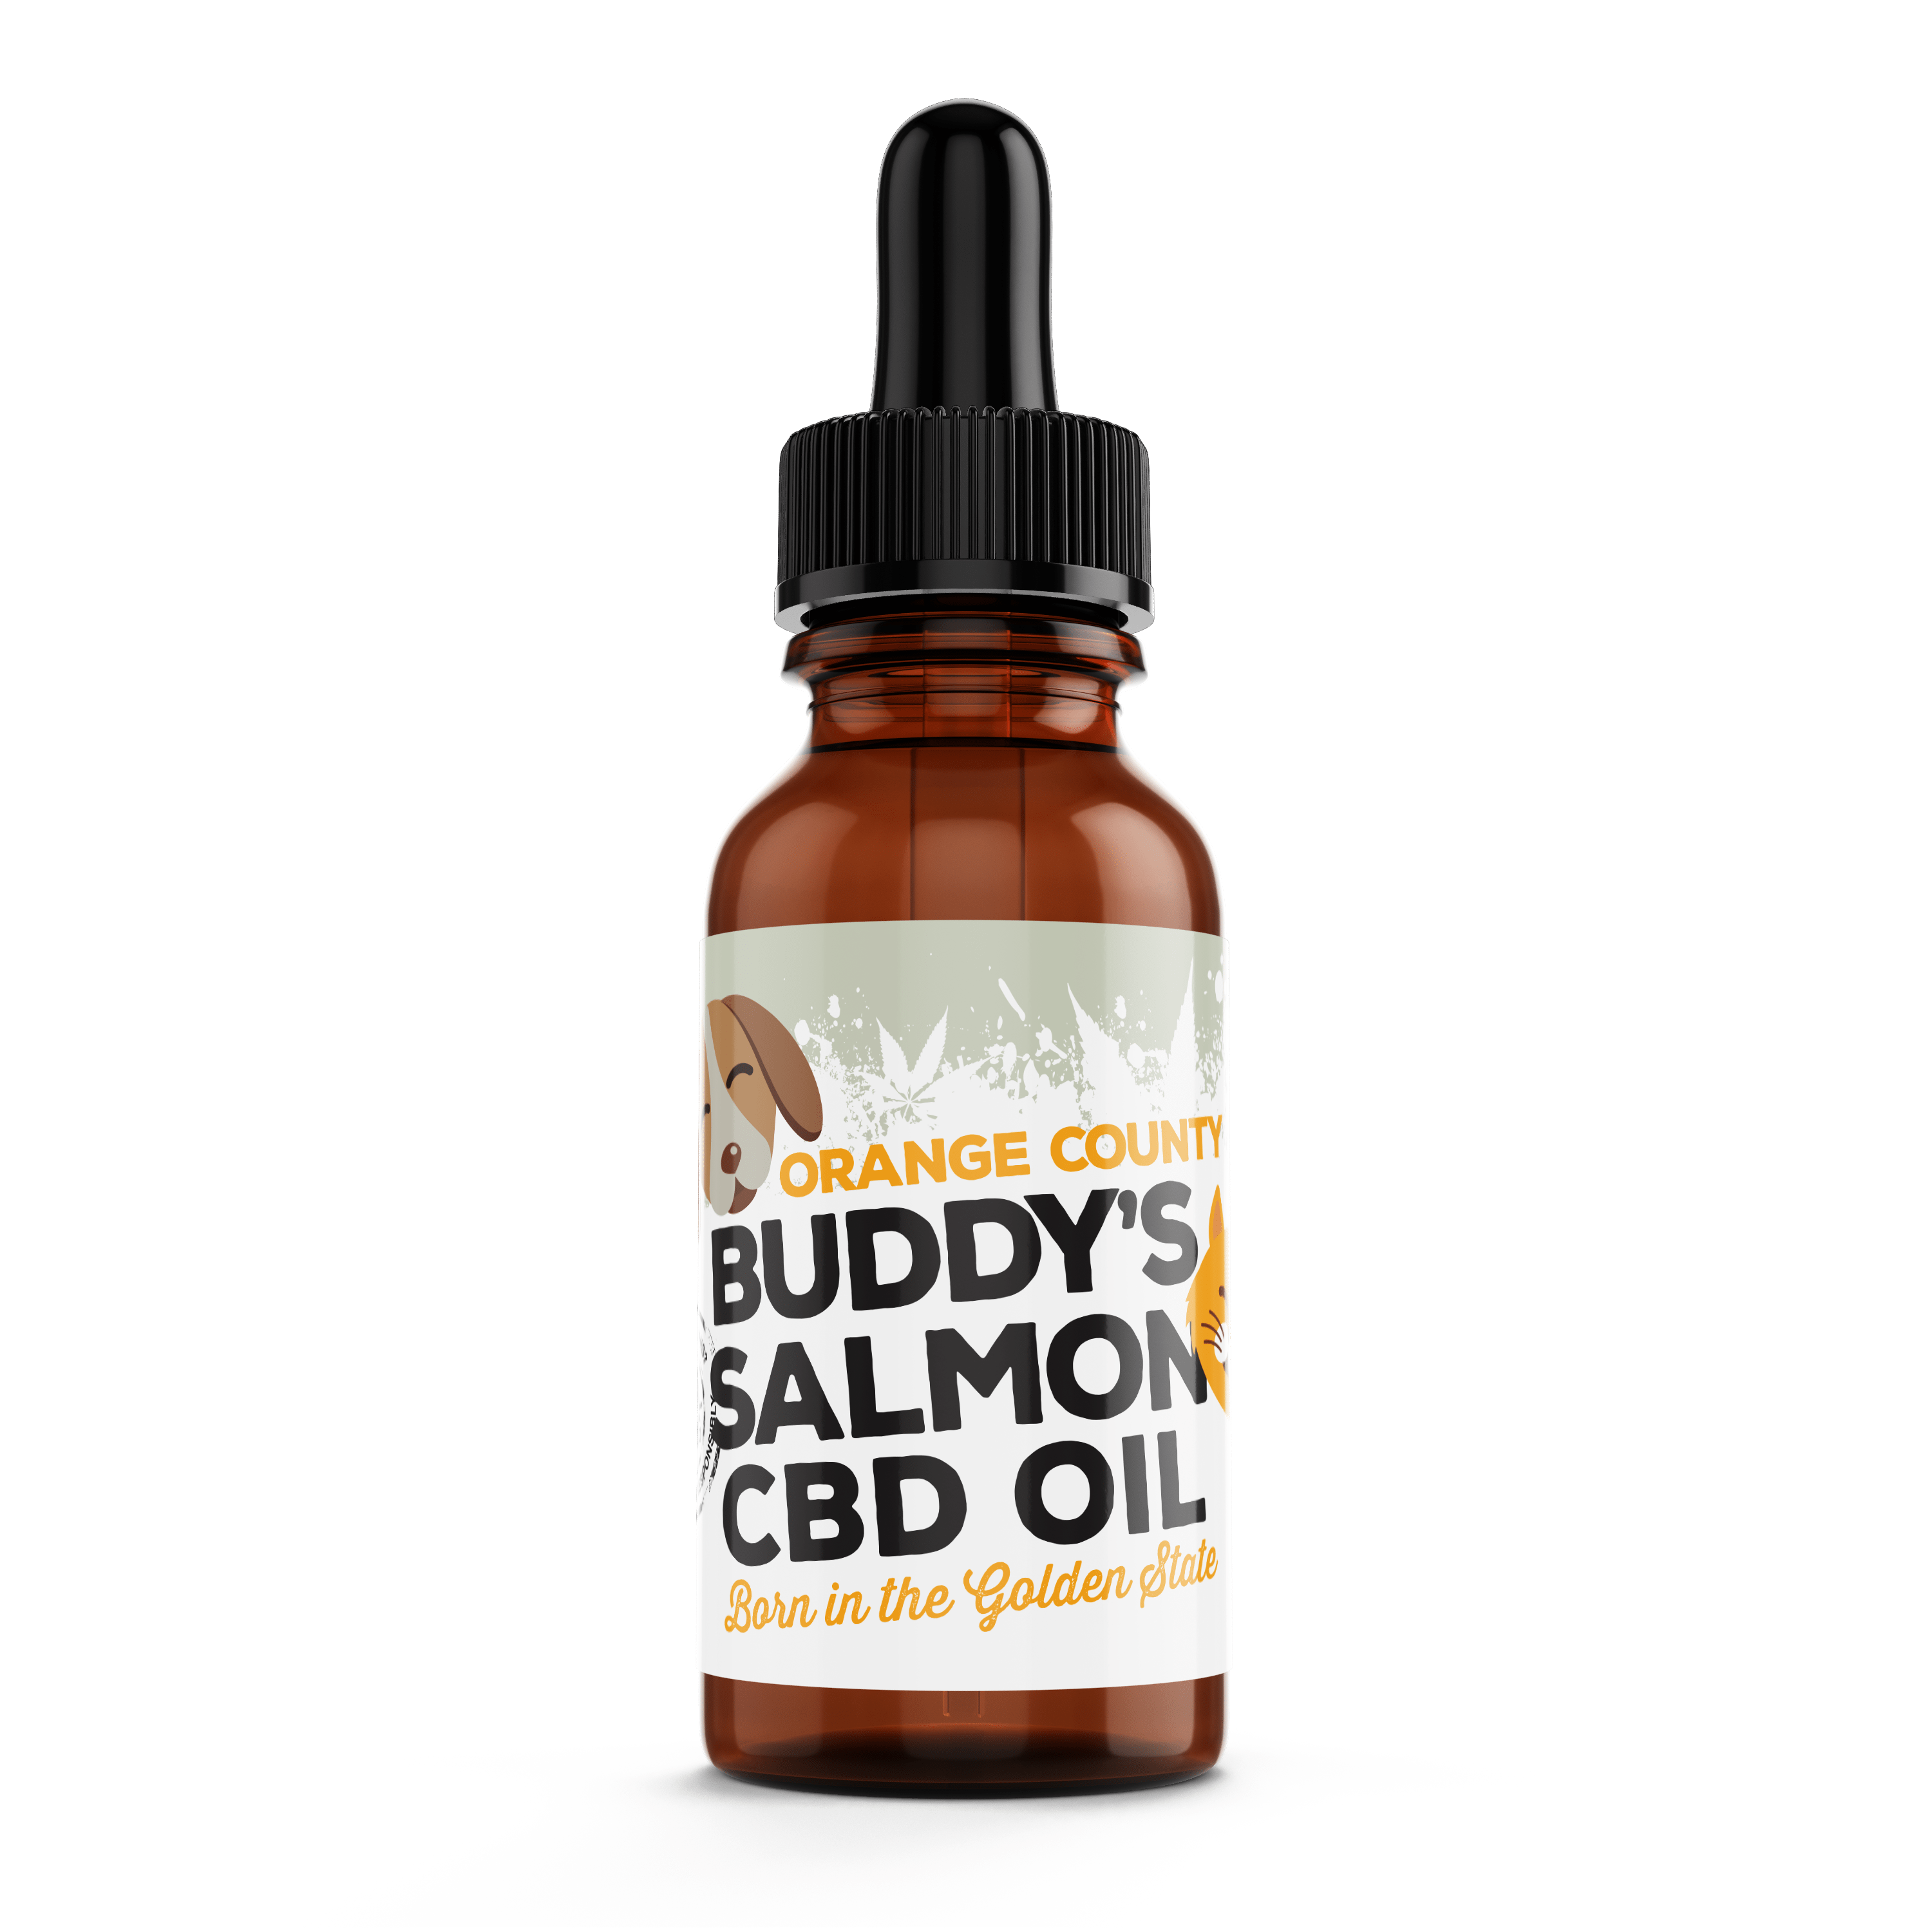 Buddy’s Salmon CBD Oil (30ml)